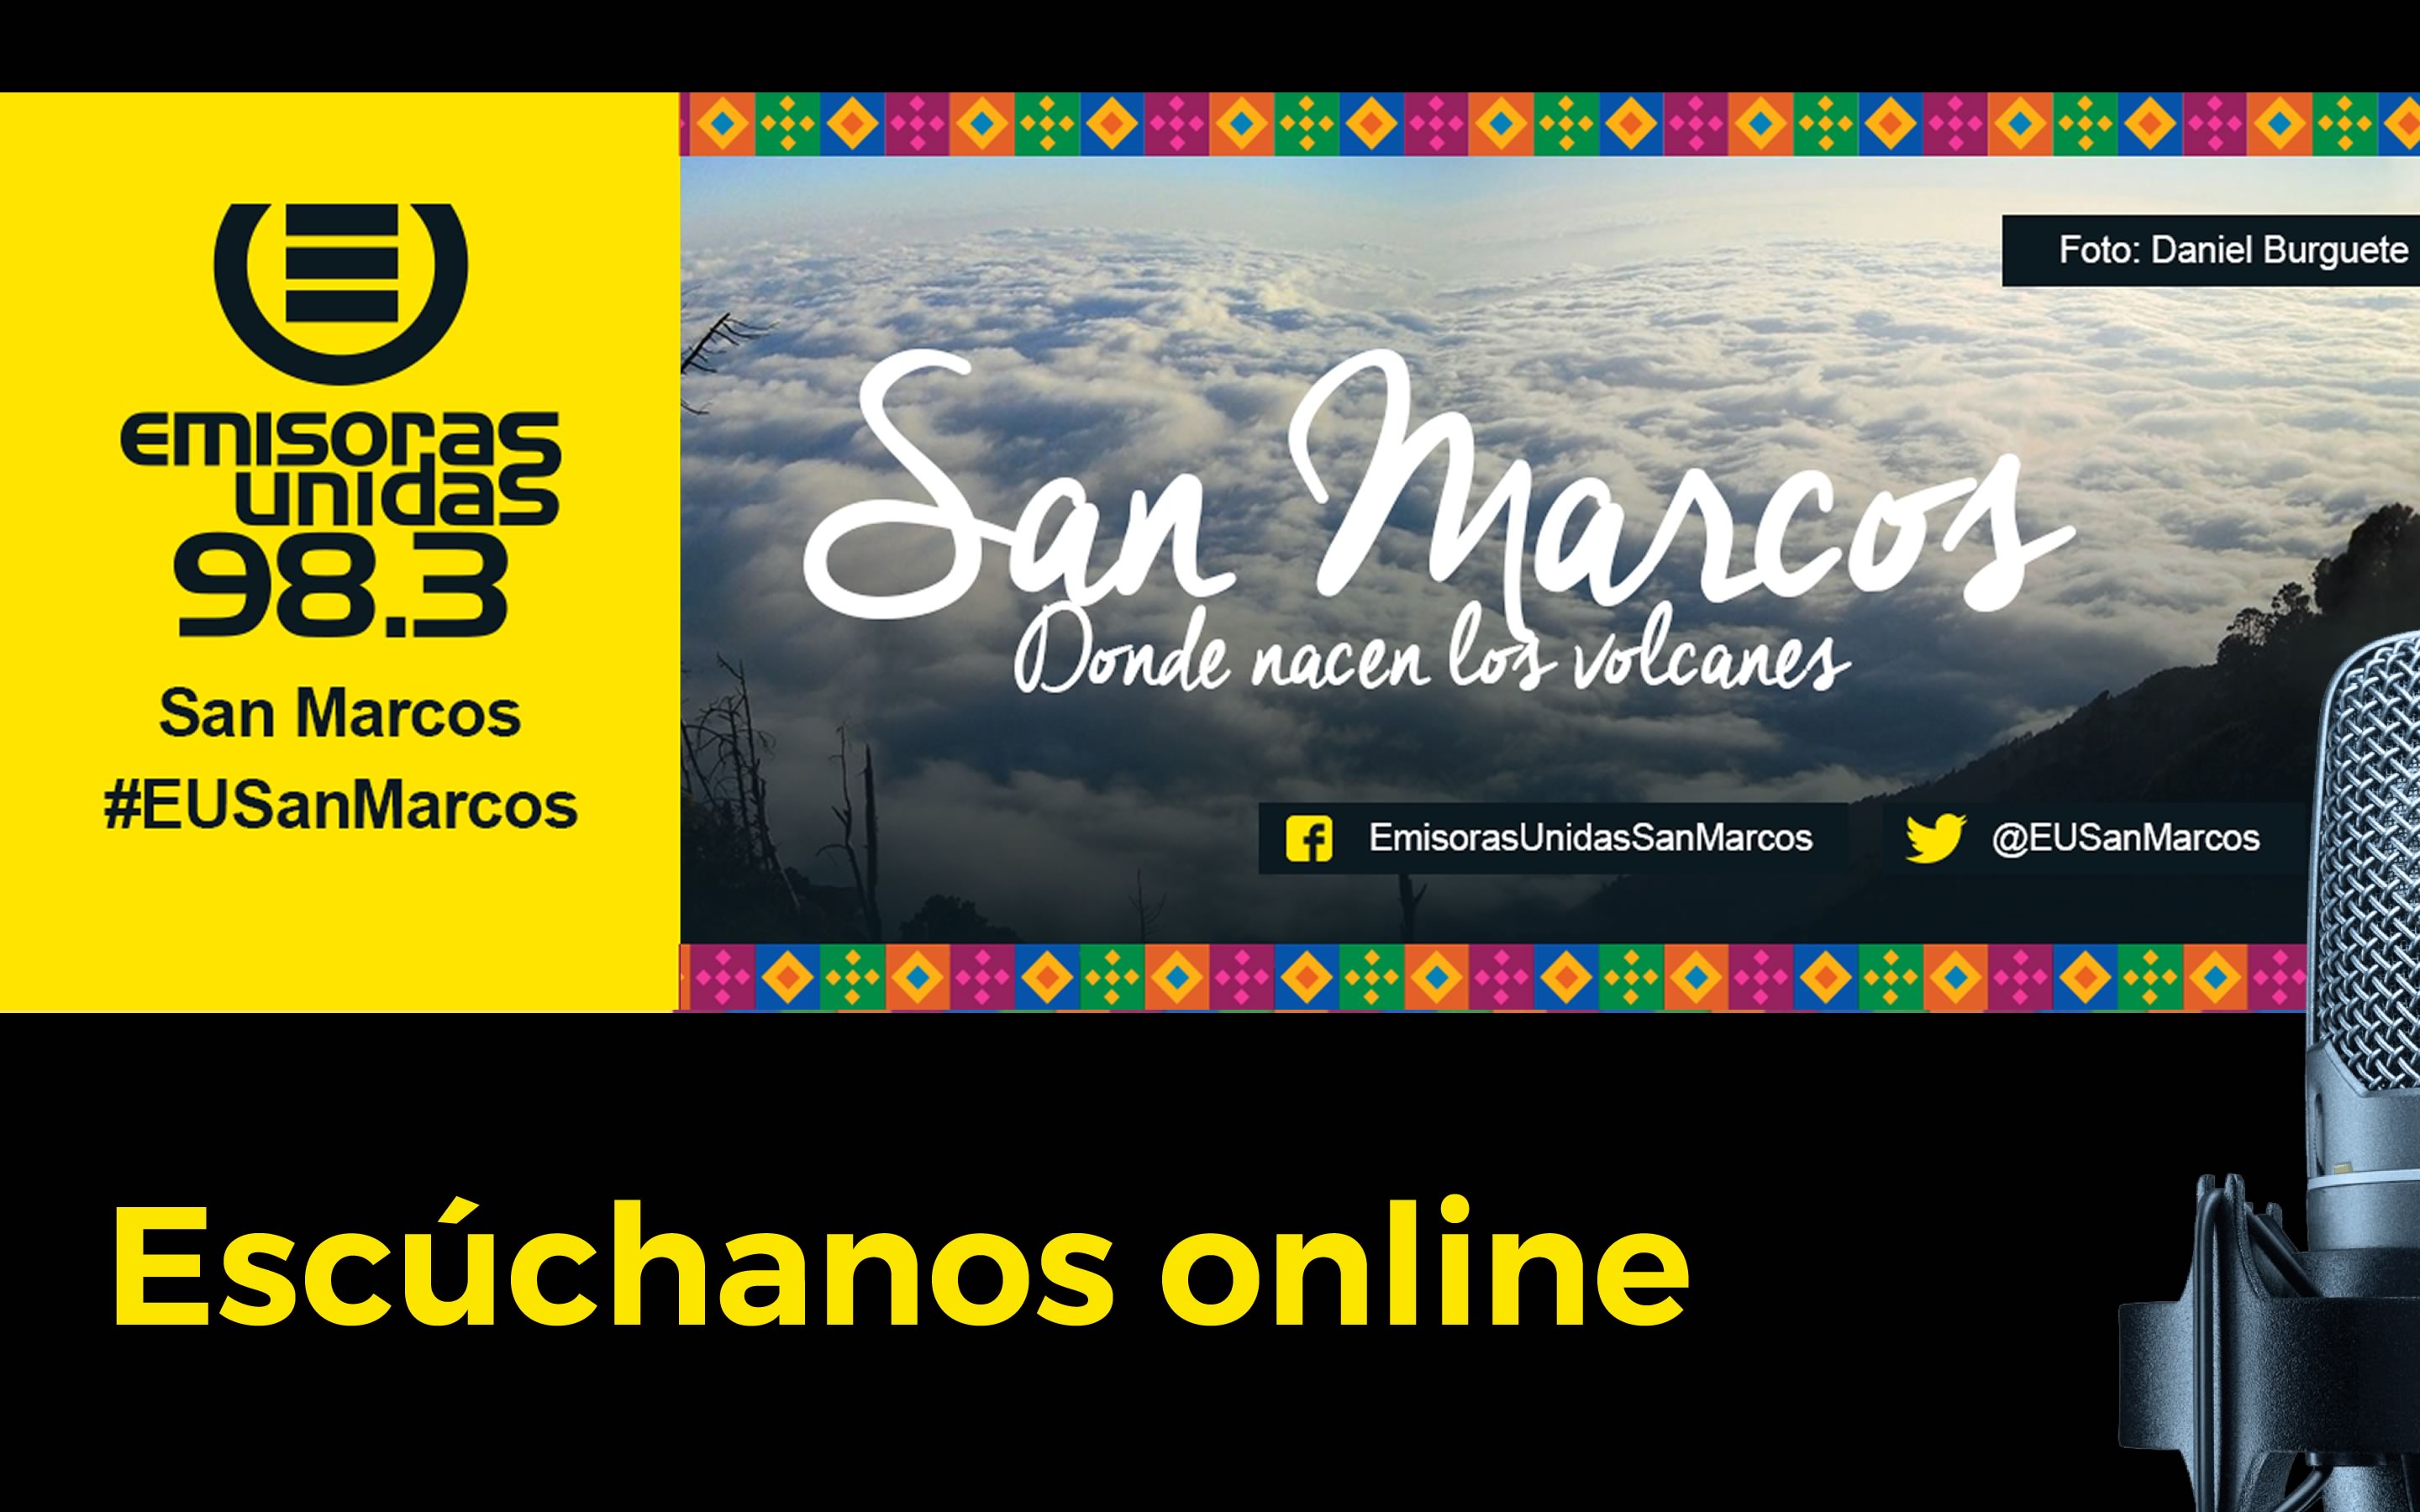 eusanmarcos san marcos sur occidente streaming online radio live guatemala emisoras unidas eu